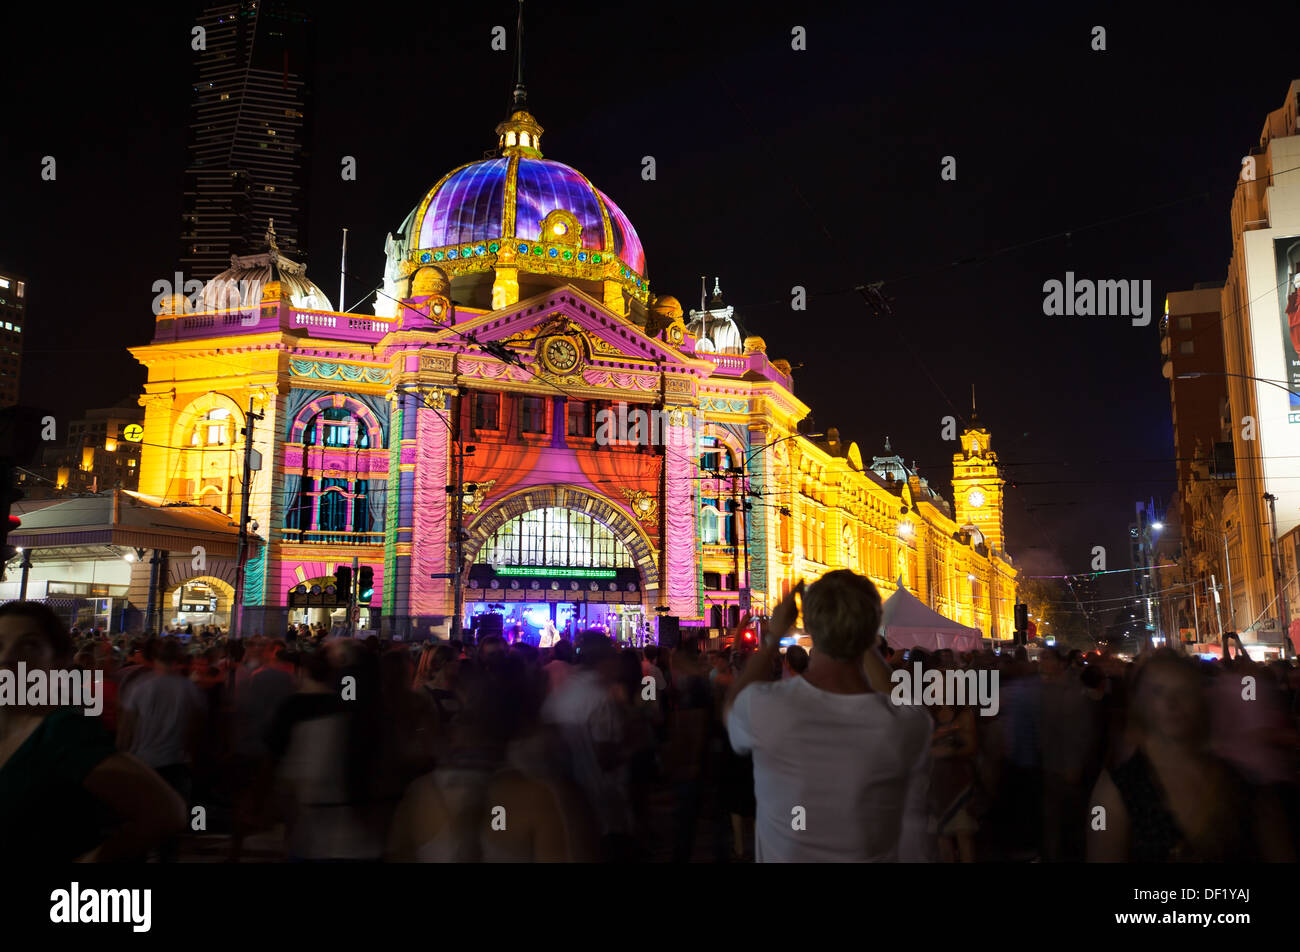 Melbourne Australia white nights / night festival in the city center Flinder street station. Stock Photo